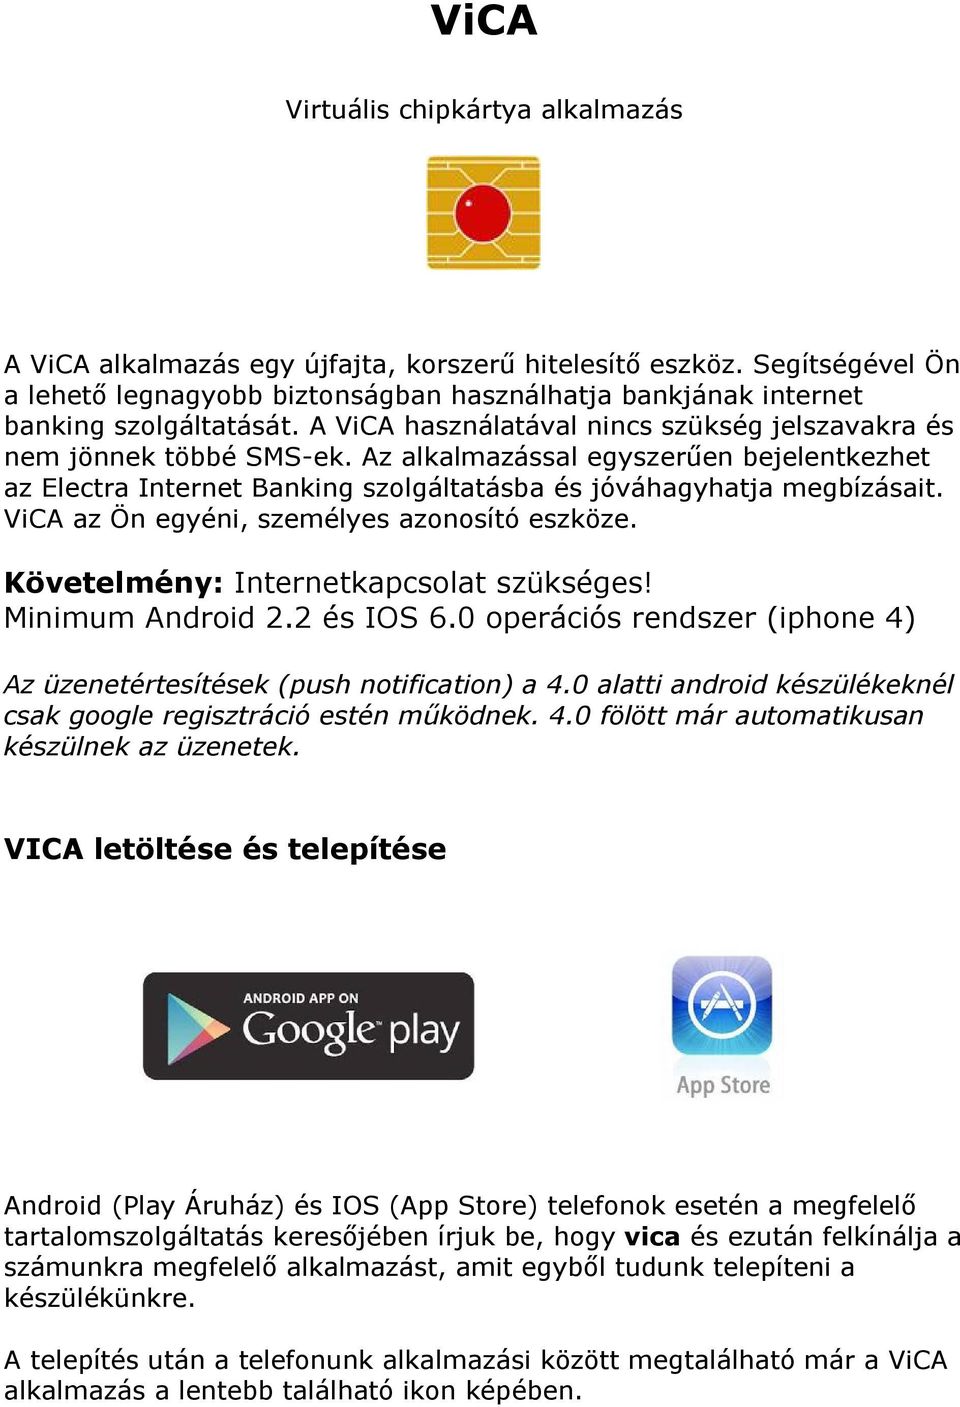 ViCA. Virtuális chipkártya alkalmazás - PDF Free Download